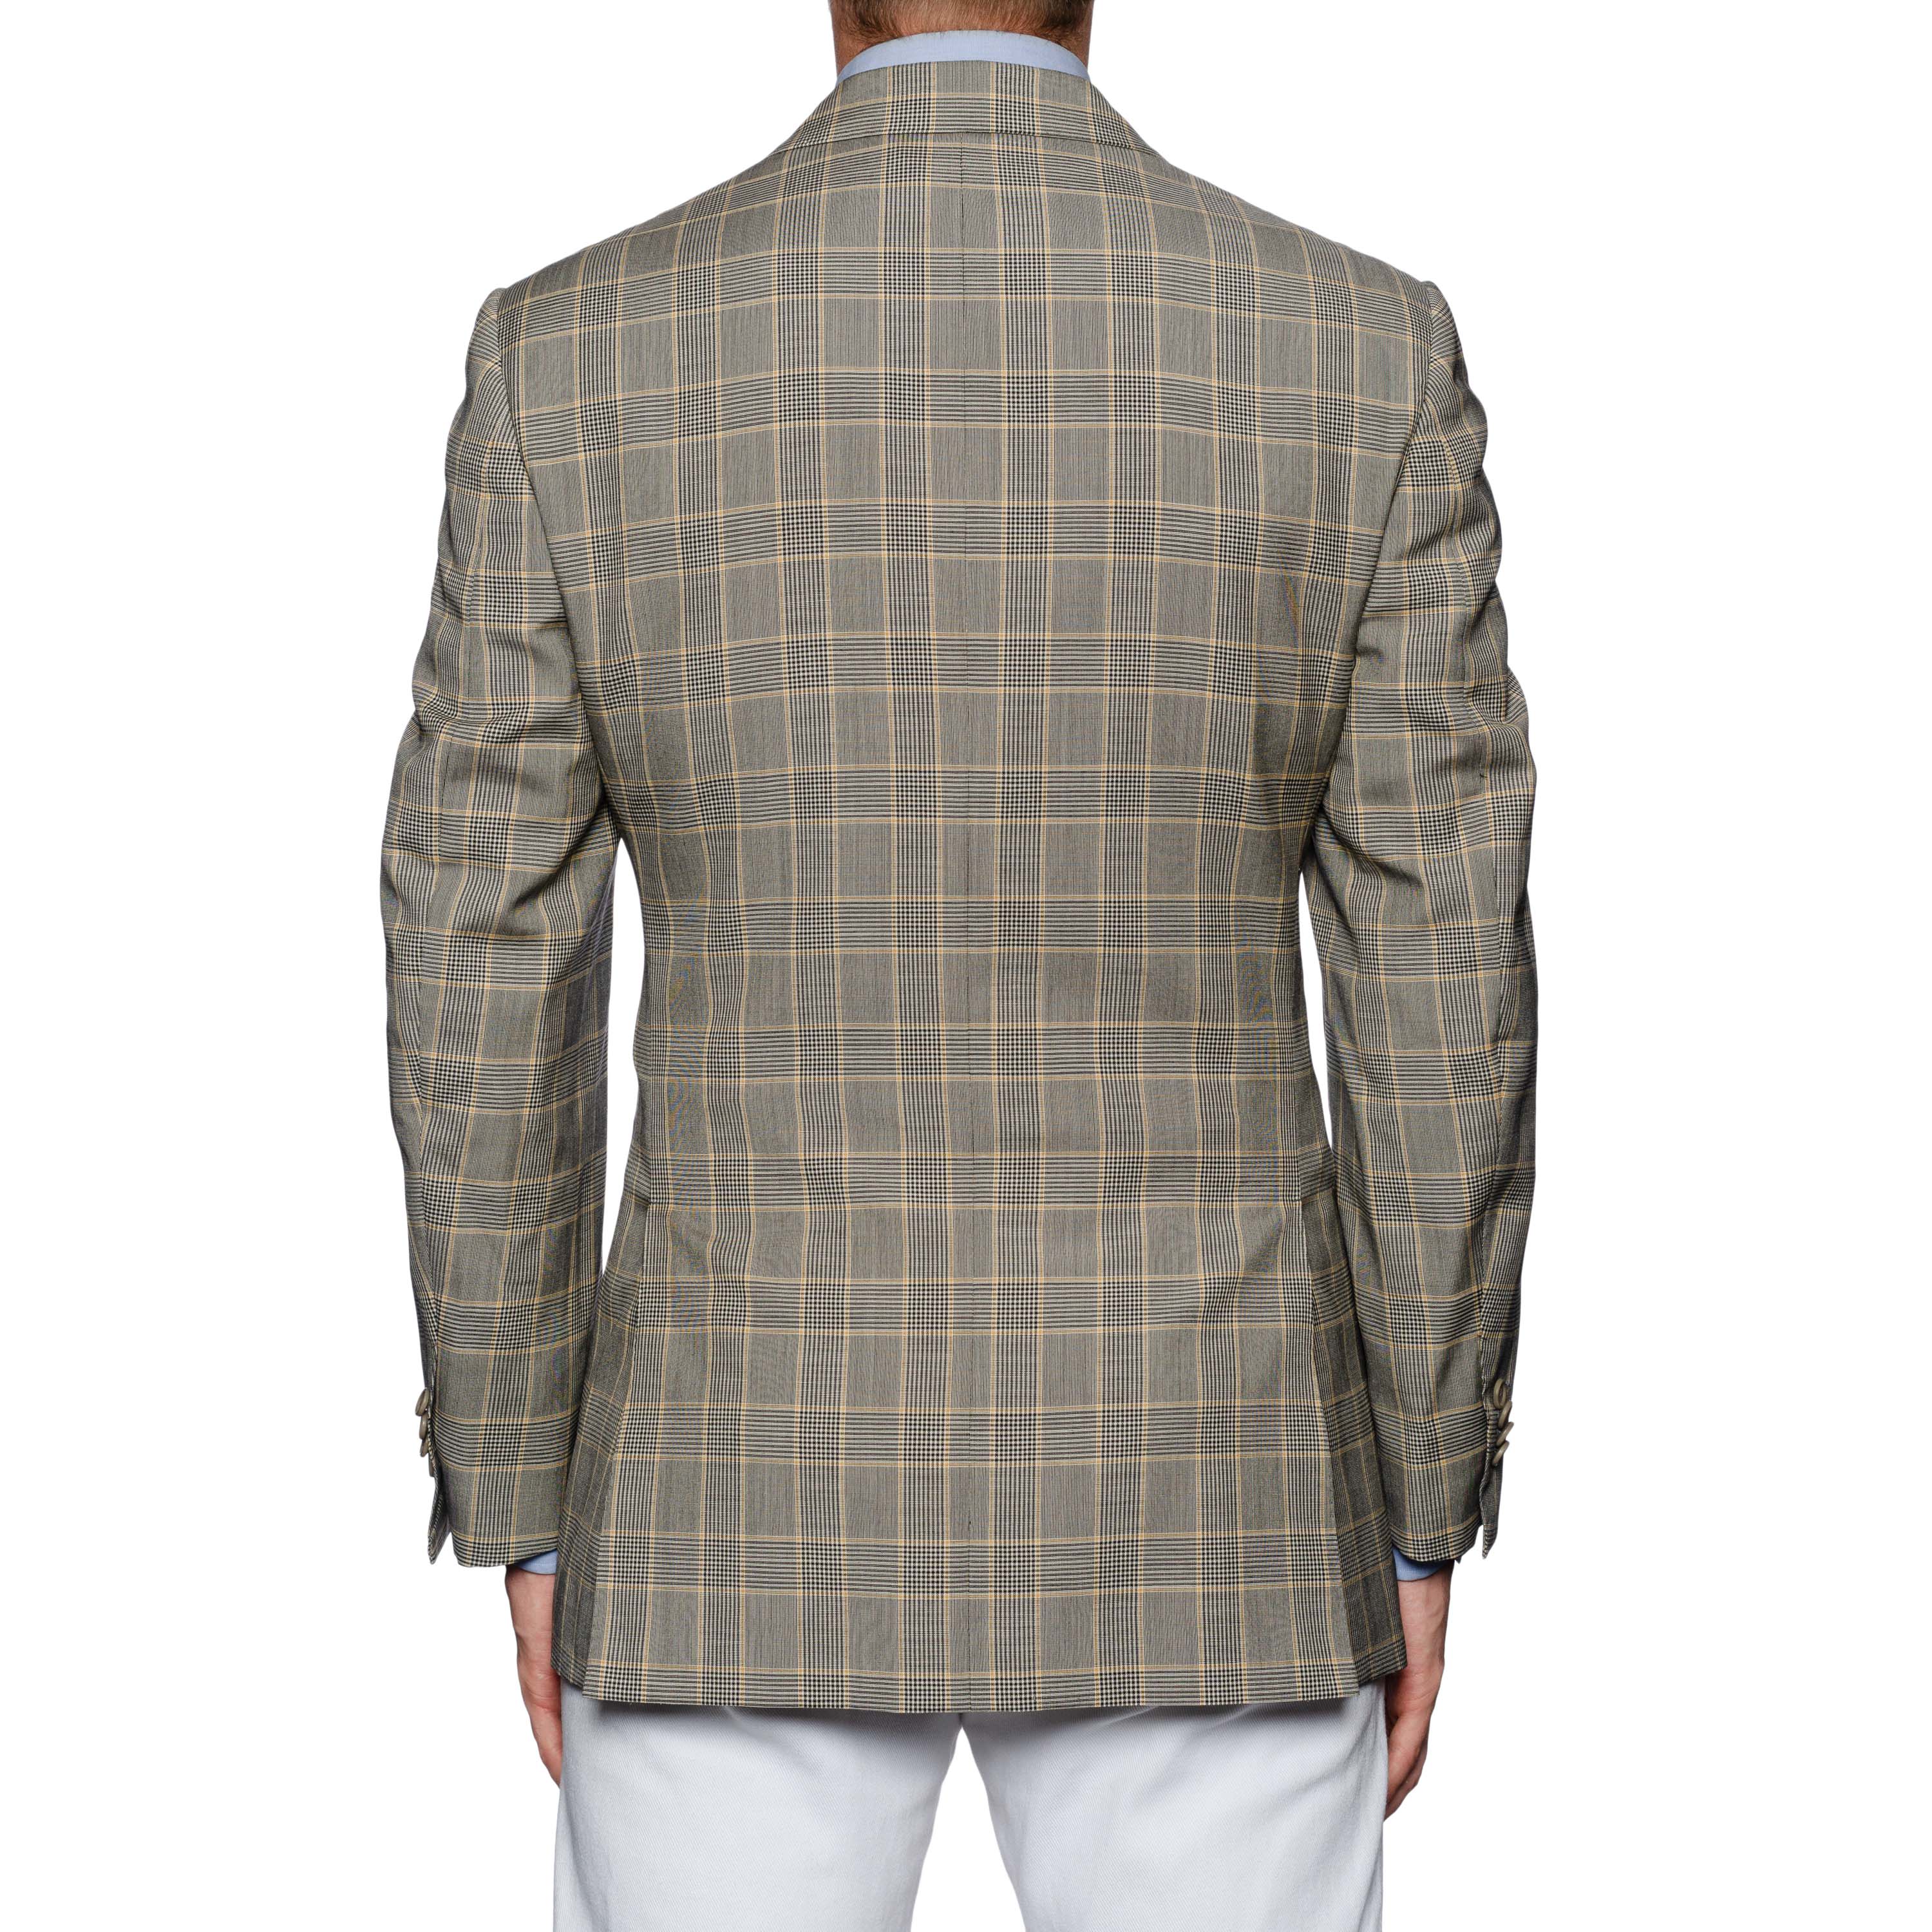 SARTORIA CASTANGIA Gray Prince of Wales Wool-Silk Sport Coat Jacket NEW CASTANGIA